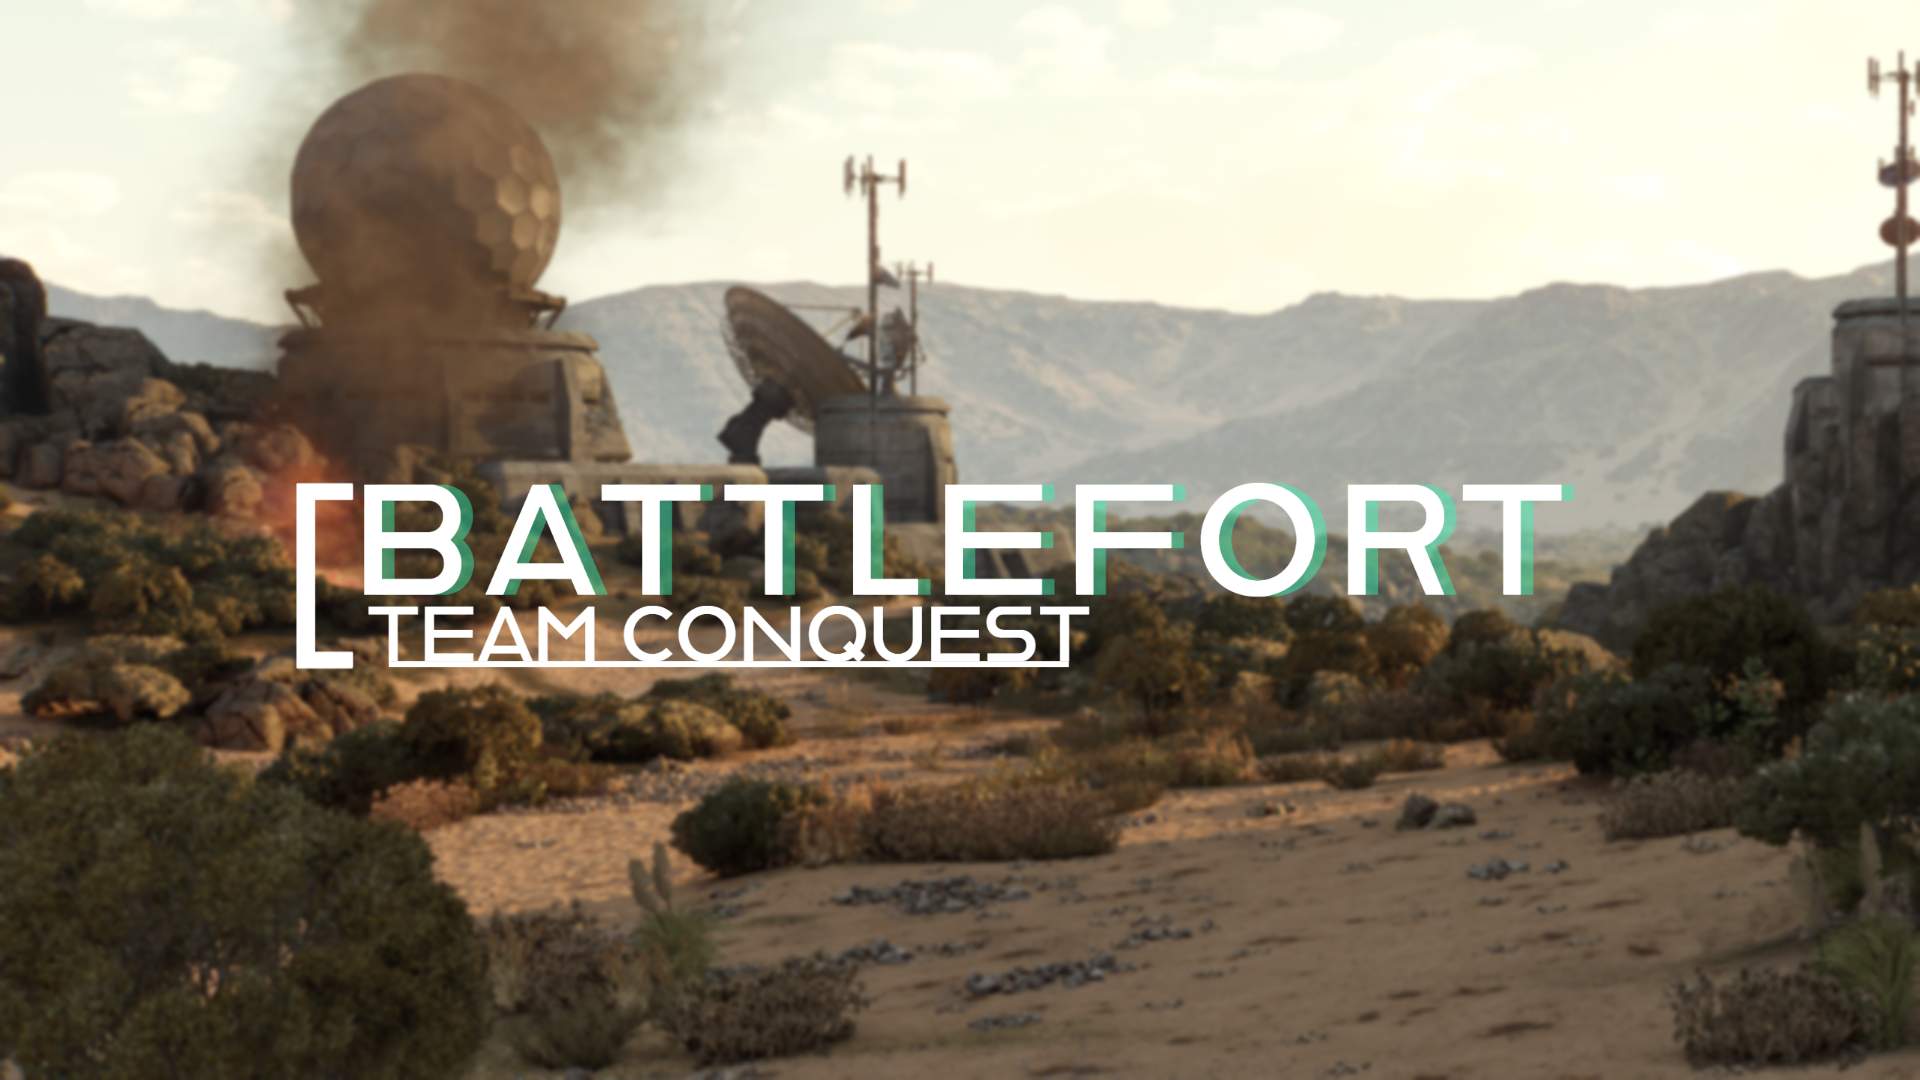 BattleFort - Team Conquest image 2